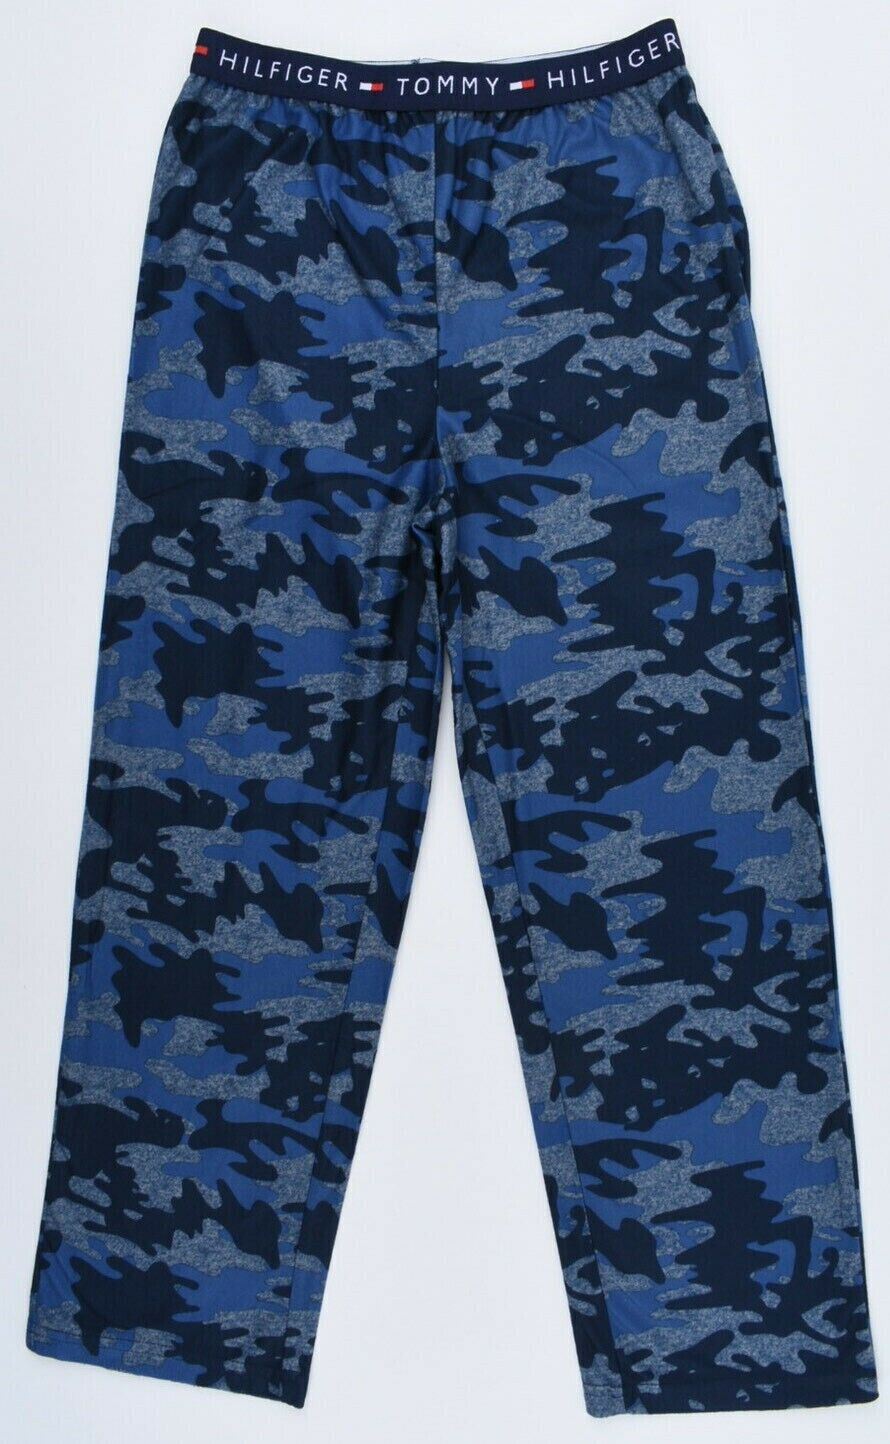 TOMMY HILFIGER Sleepwear Boys' Soft Pyjama Pants, Blue Camo, size 6-7 years